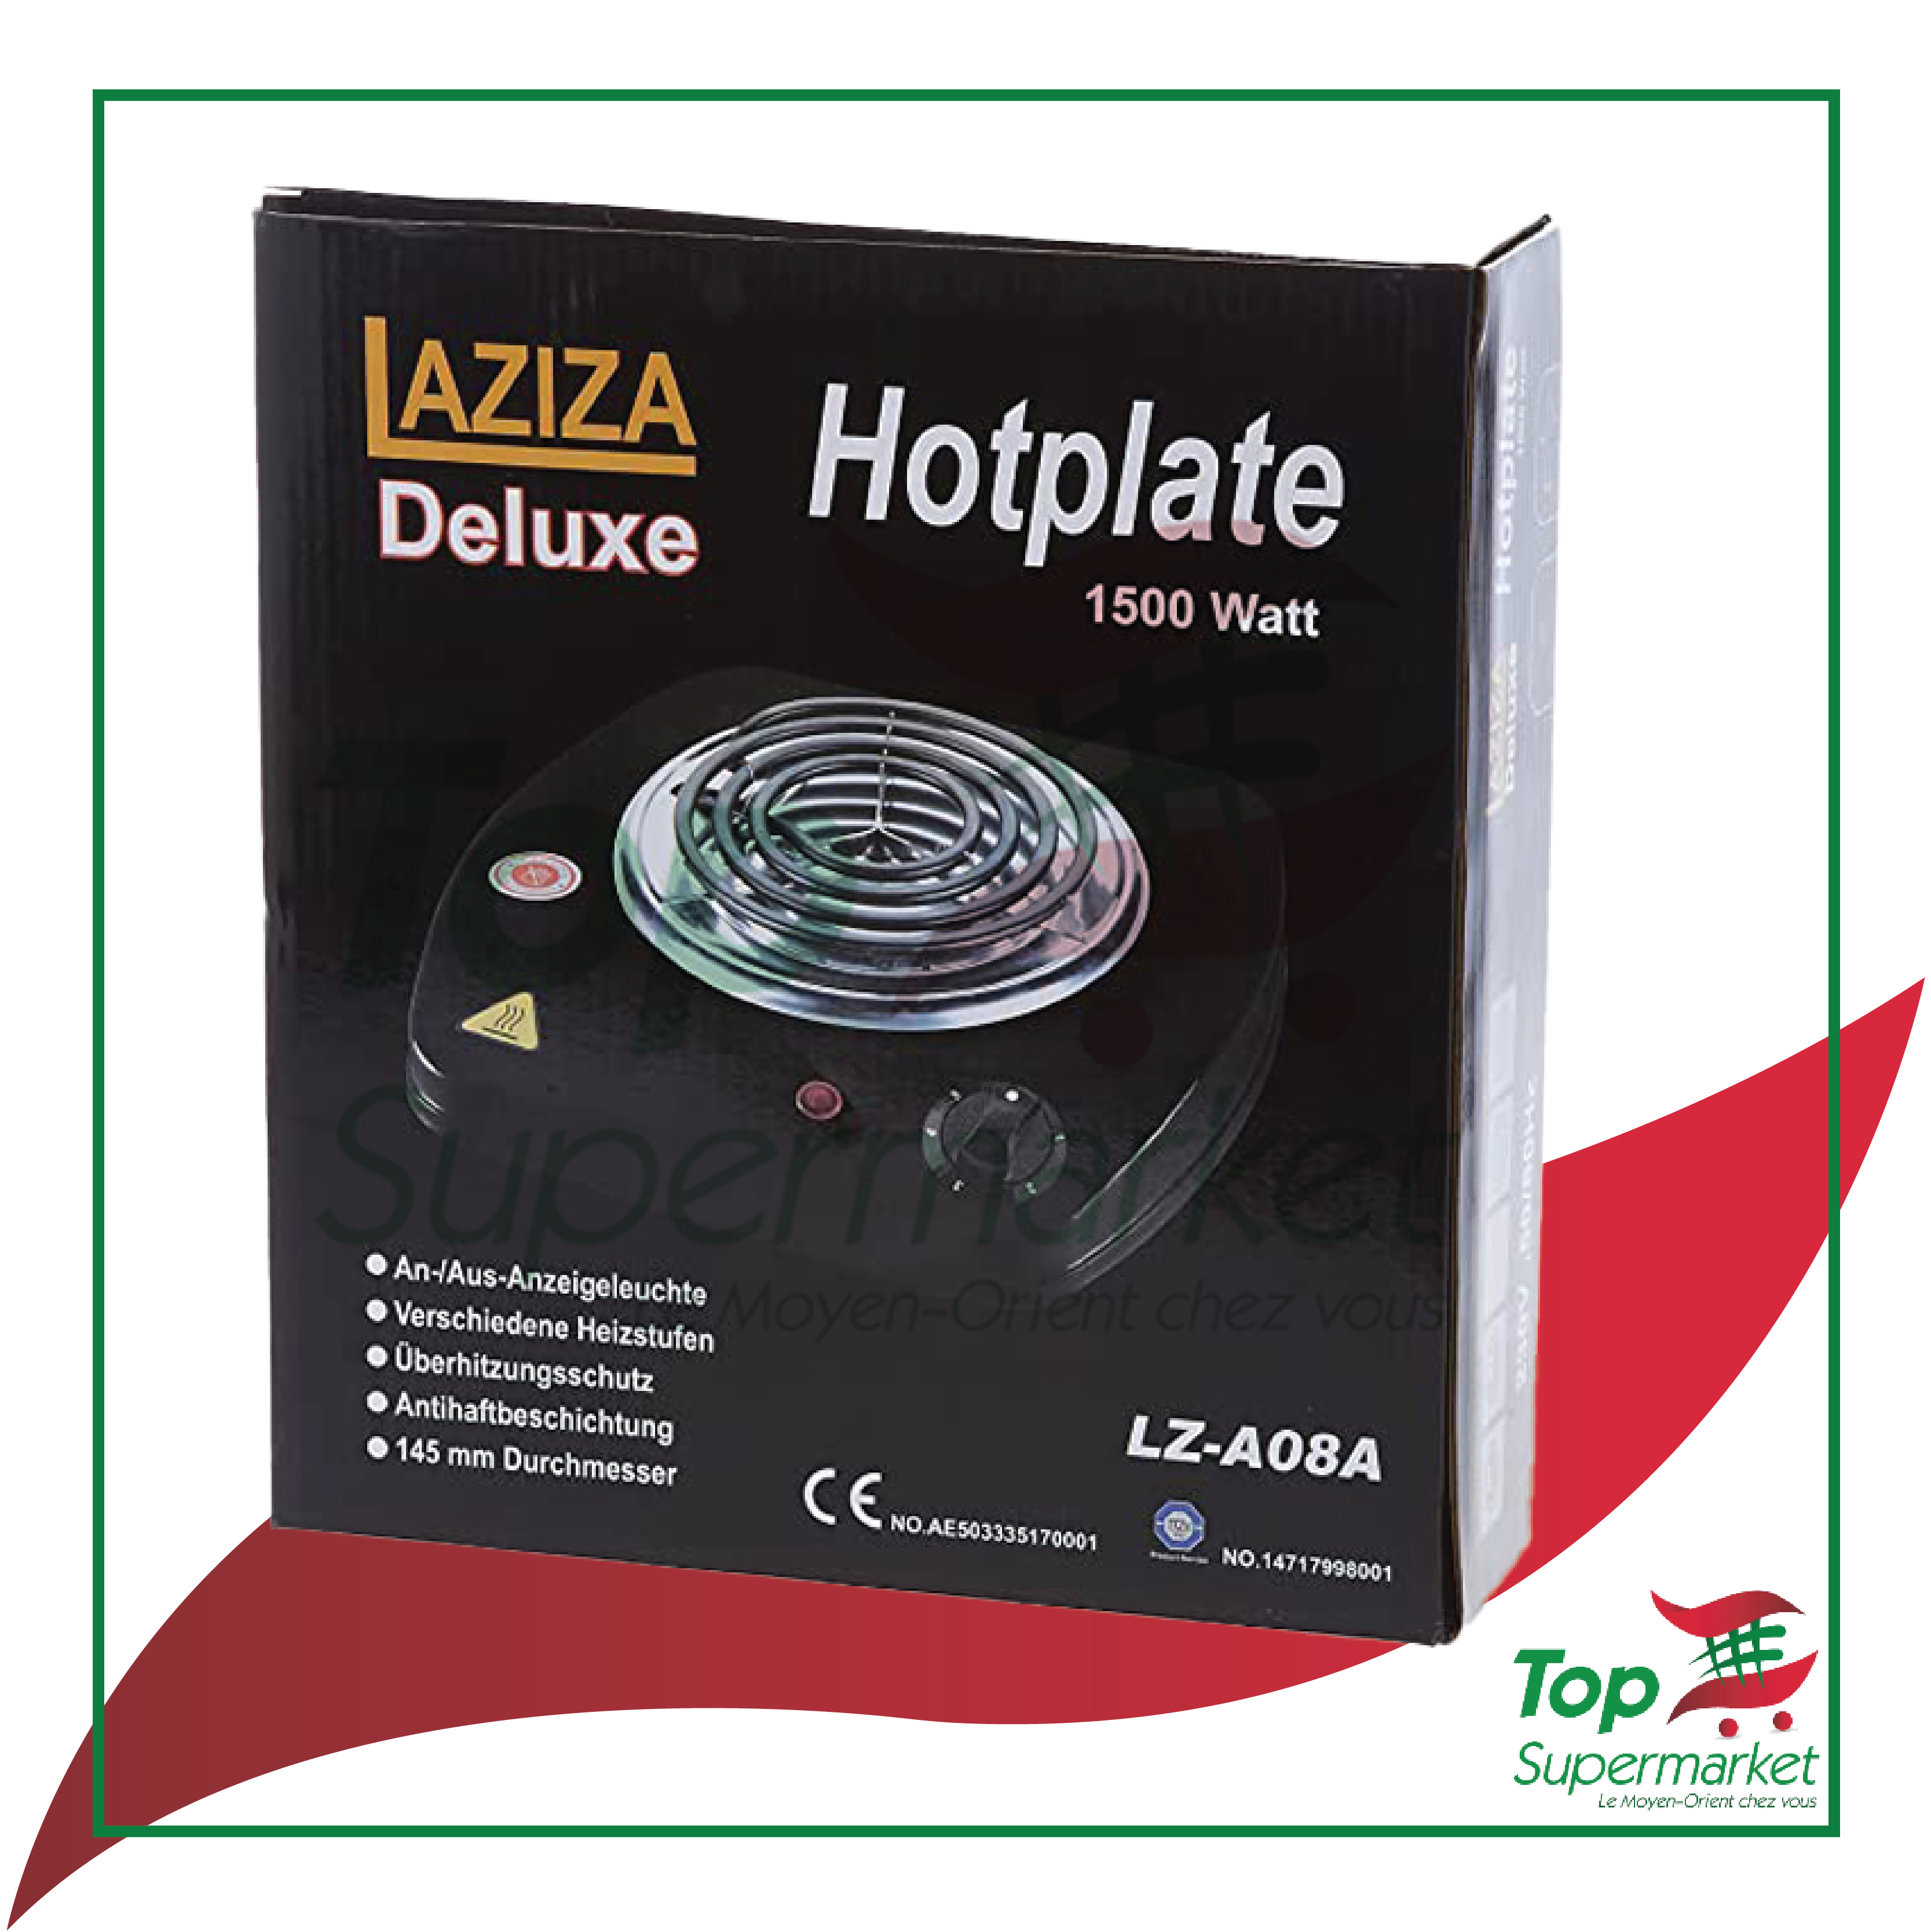 Laziza Hot Plate Deluxe